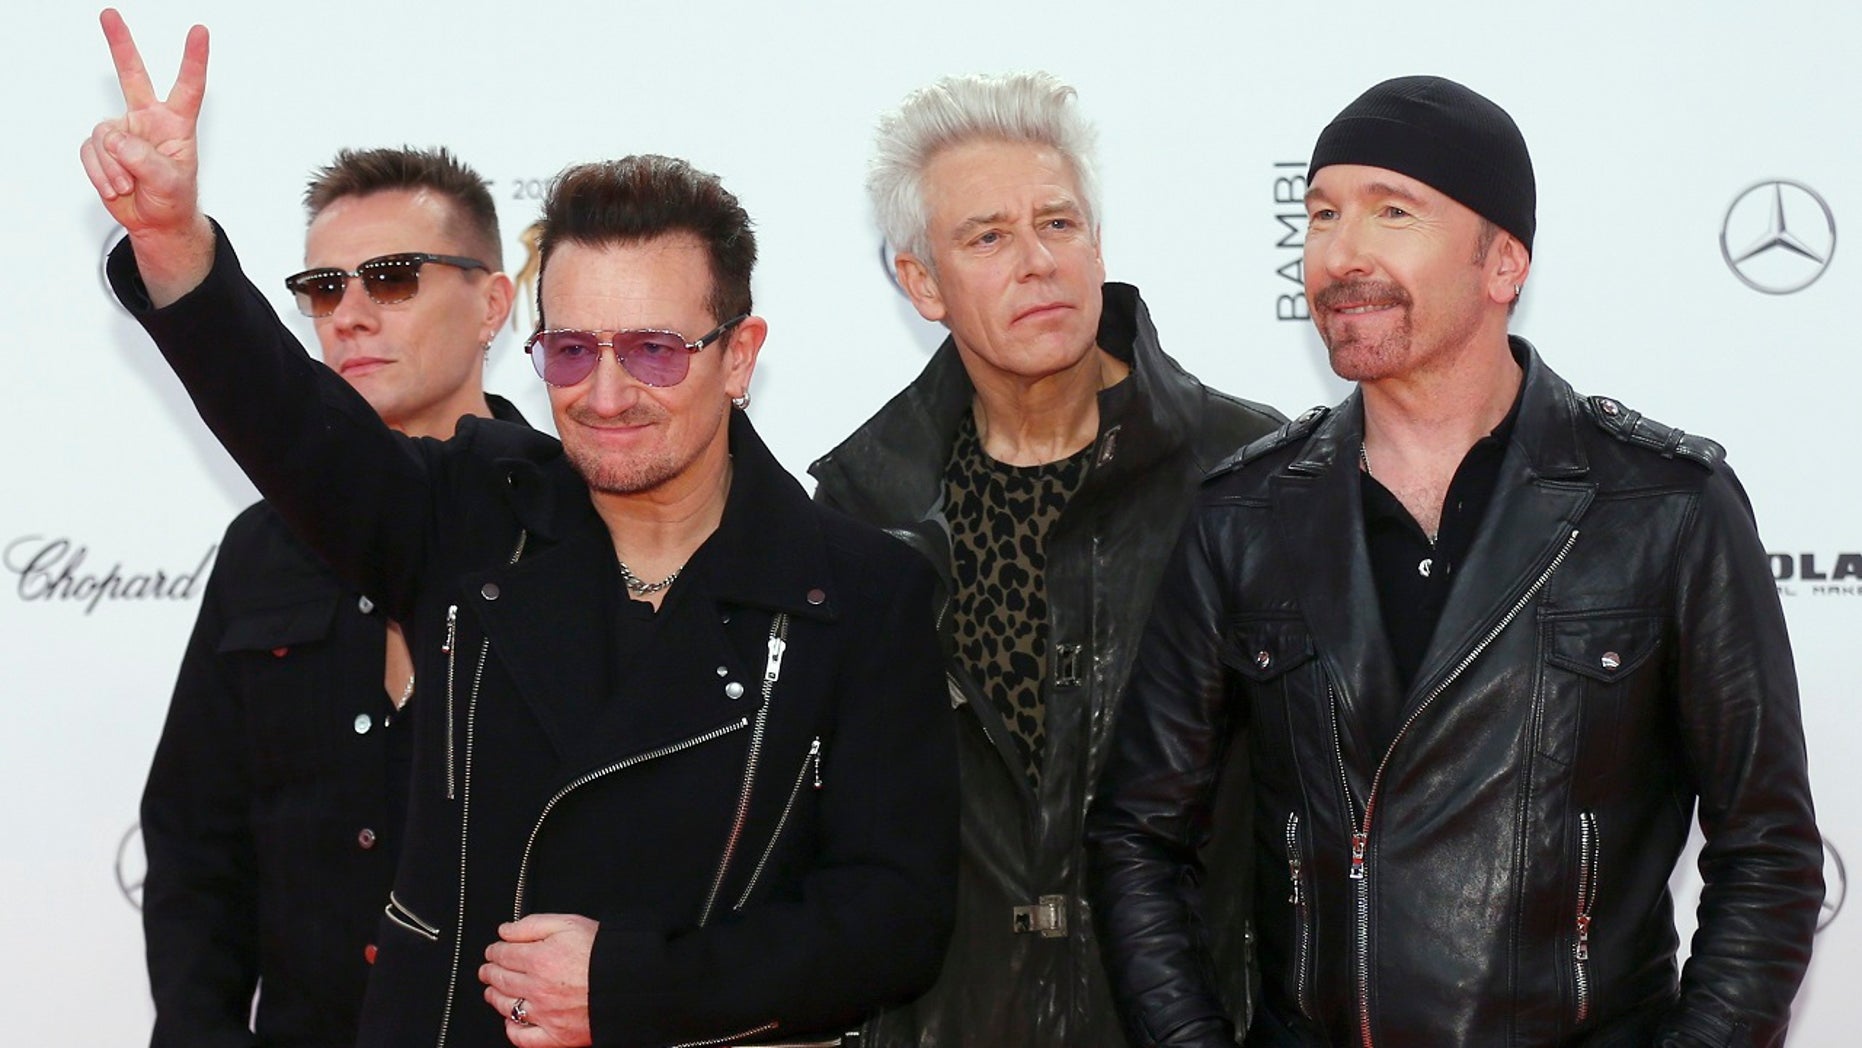 Irish rock band U2 has won 22 Grammys.